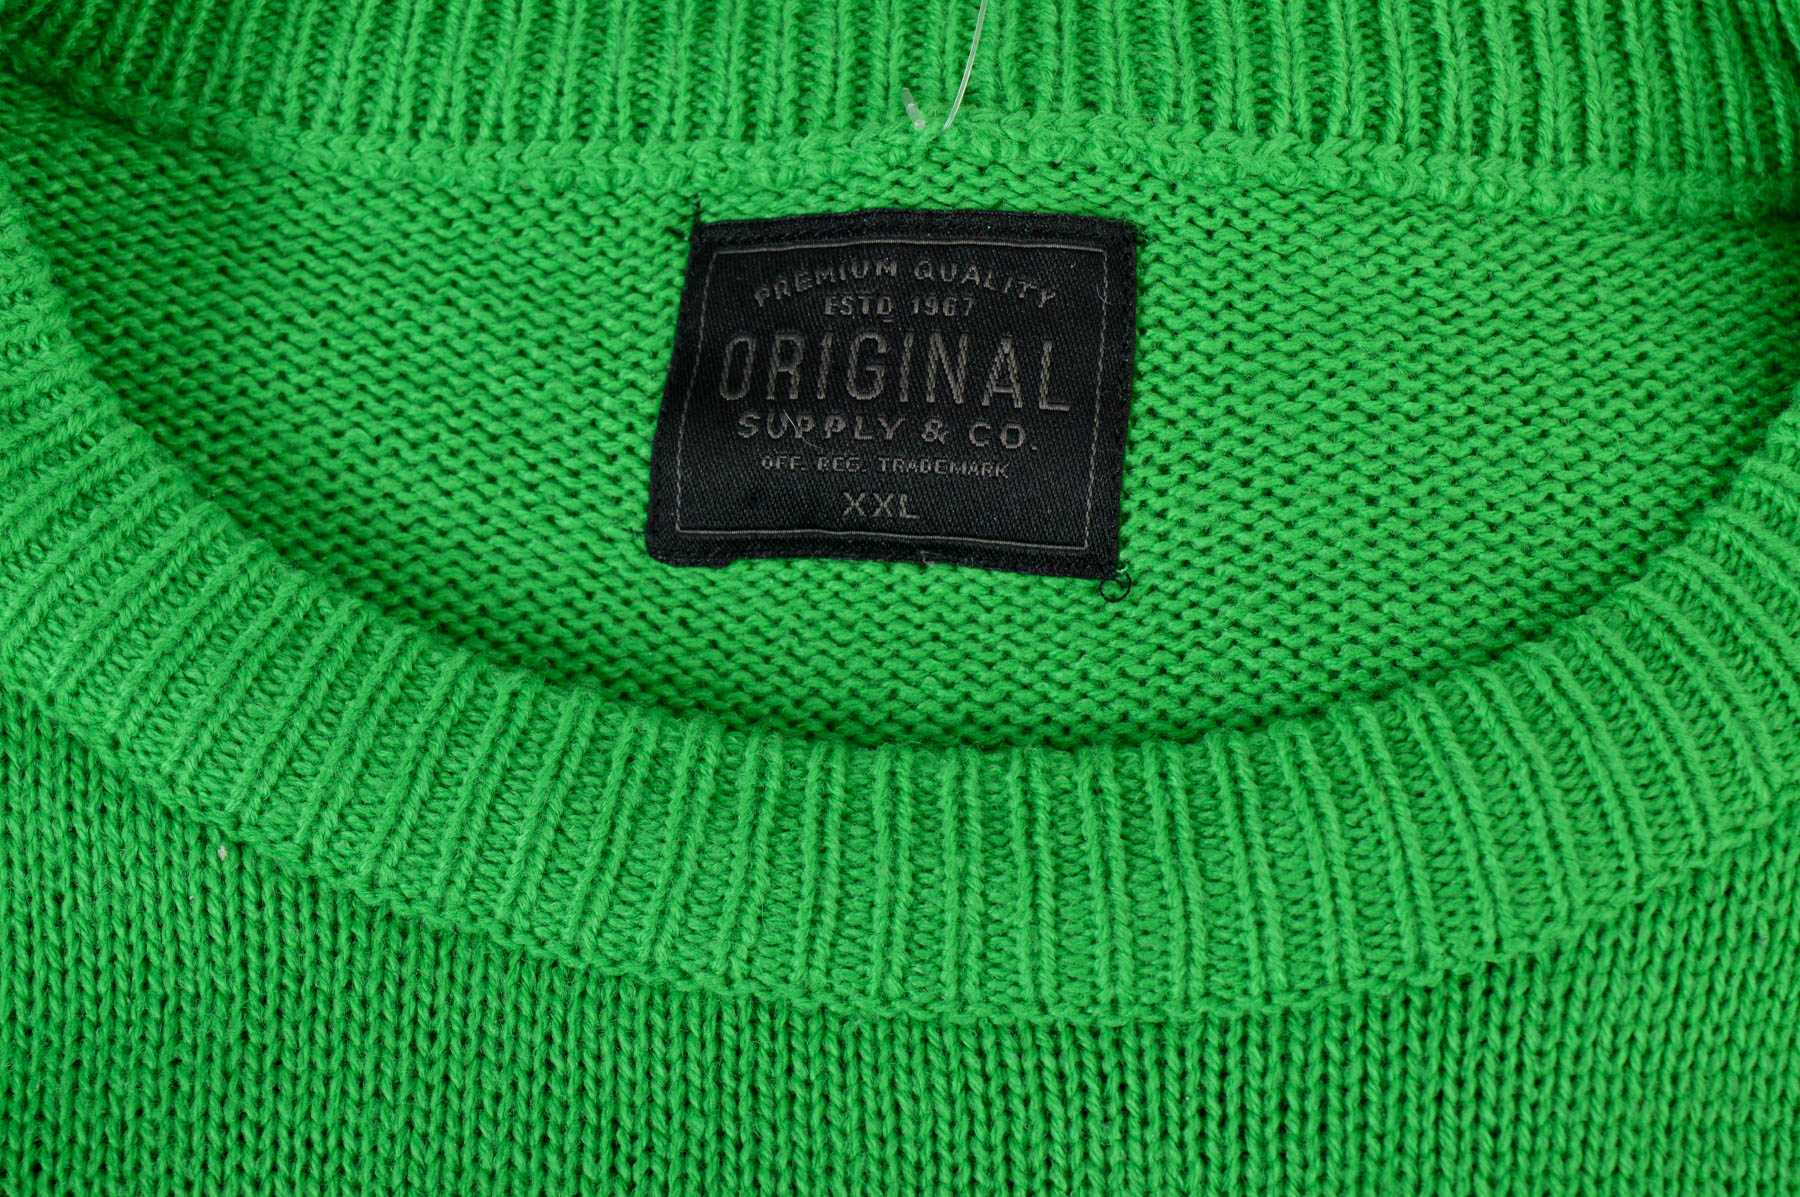 Men's sweater - Original Supply & Co. - 2